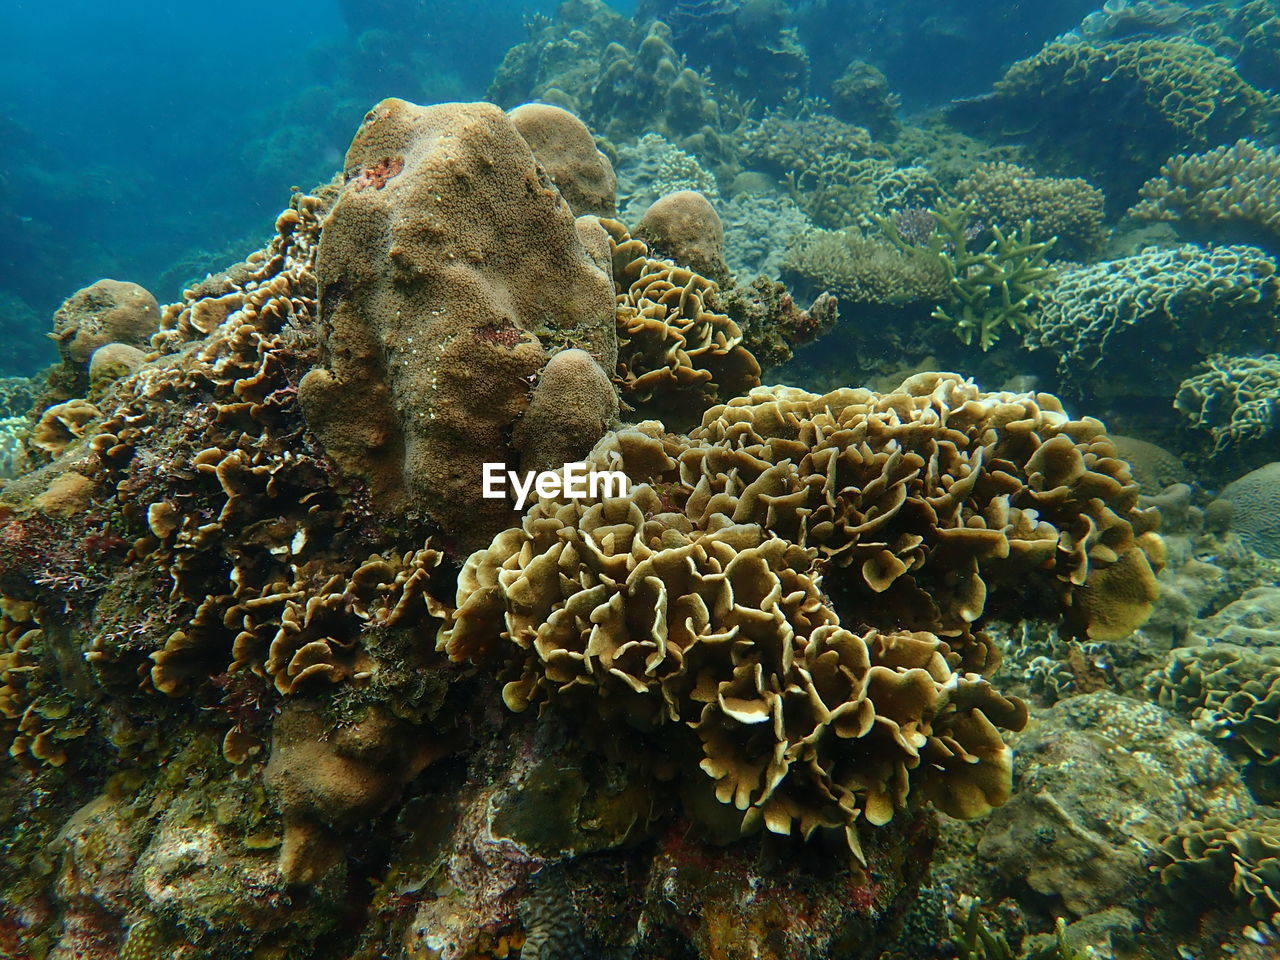 Beautiful coral found at coral reef area at tioman island, malaysia